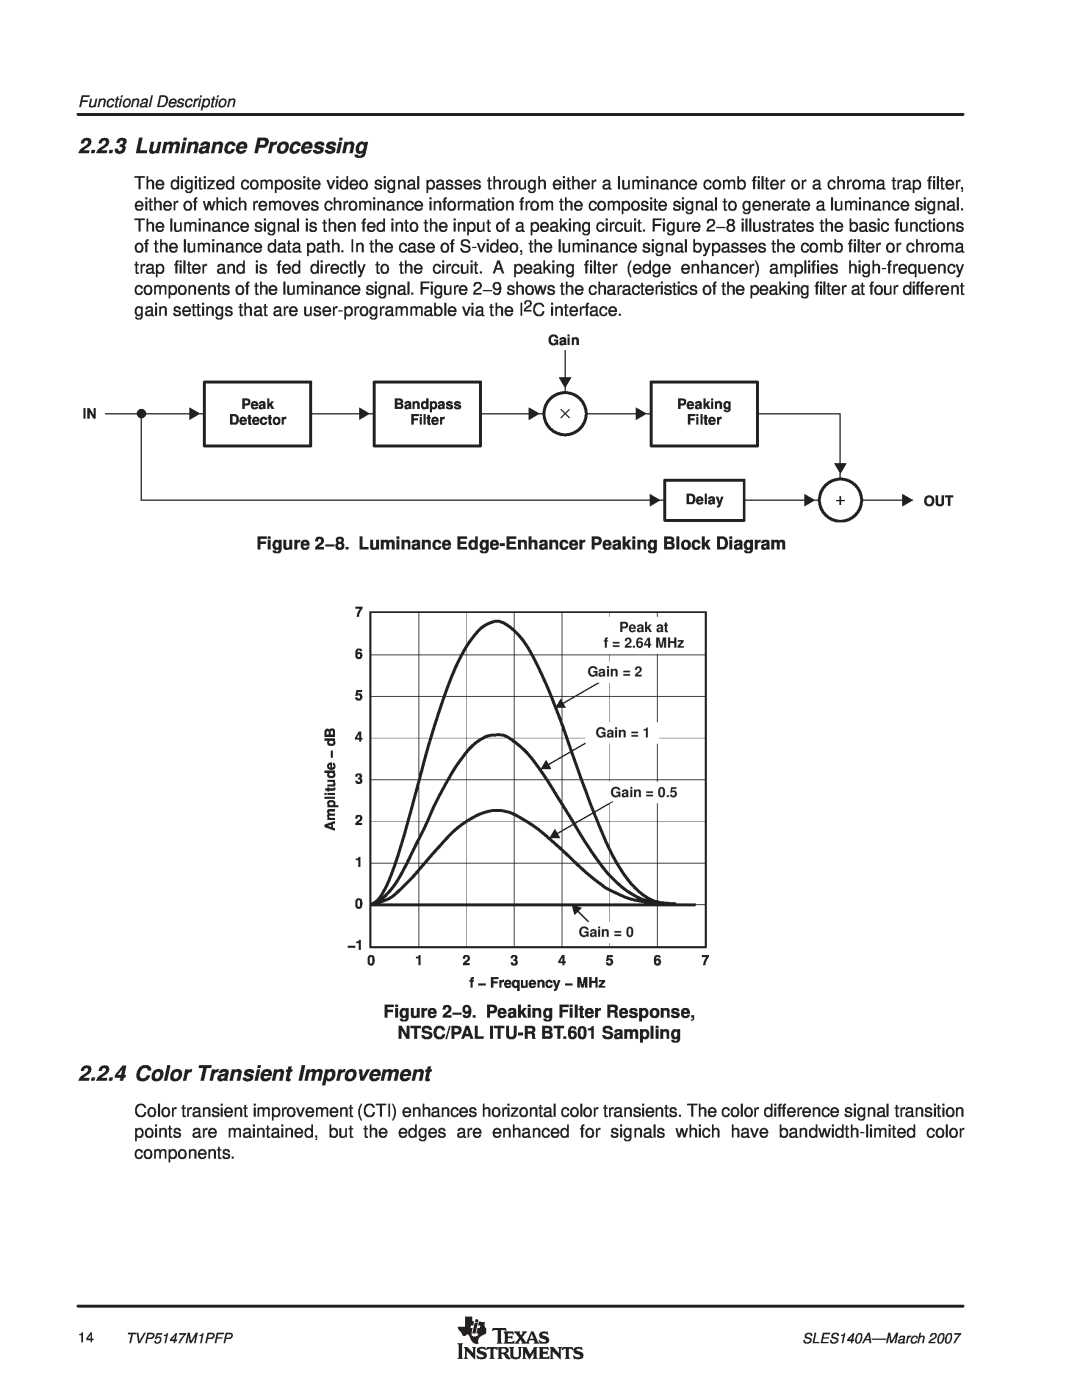 Texas Instruments TVP5147M1PFP manual Luminance Processing, Color Transient Improvement 